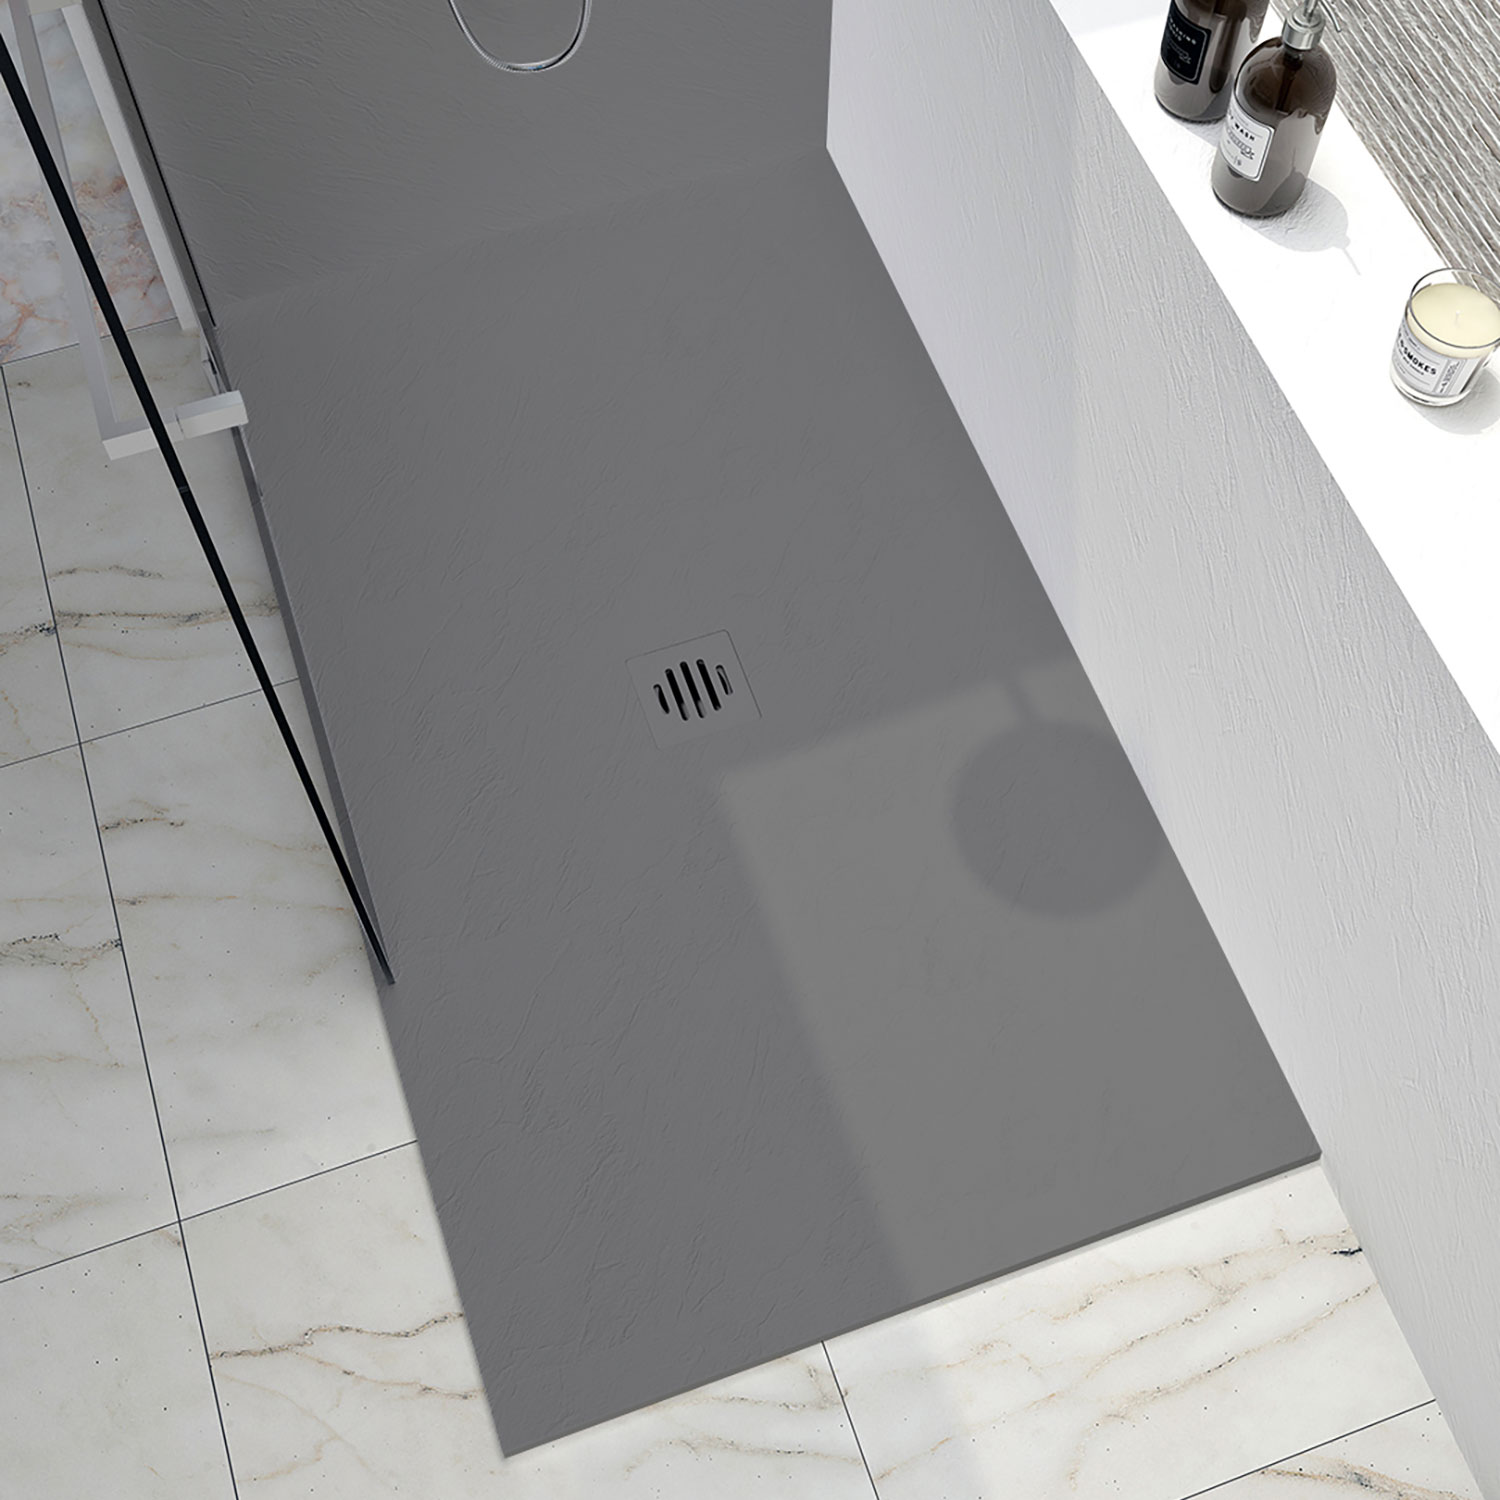 Shower base Slate 36 x 36, custom-made tile flange installation, in concrete grey